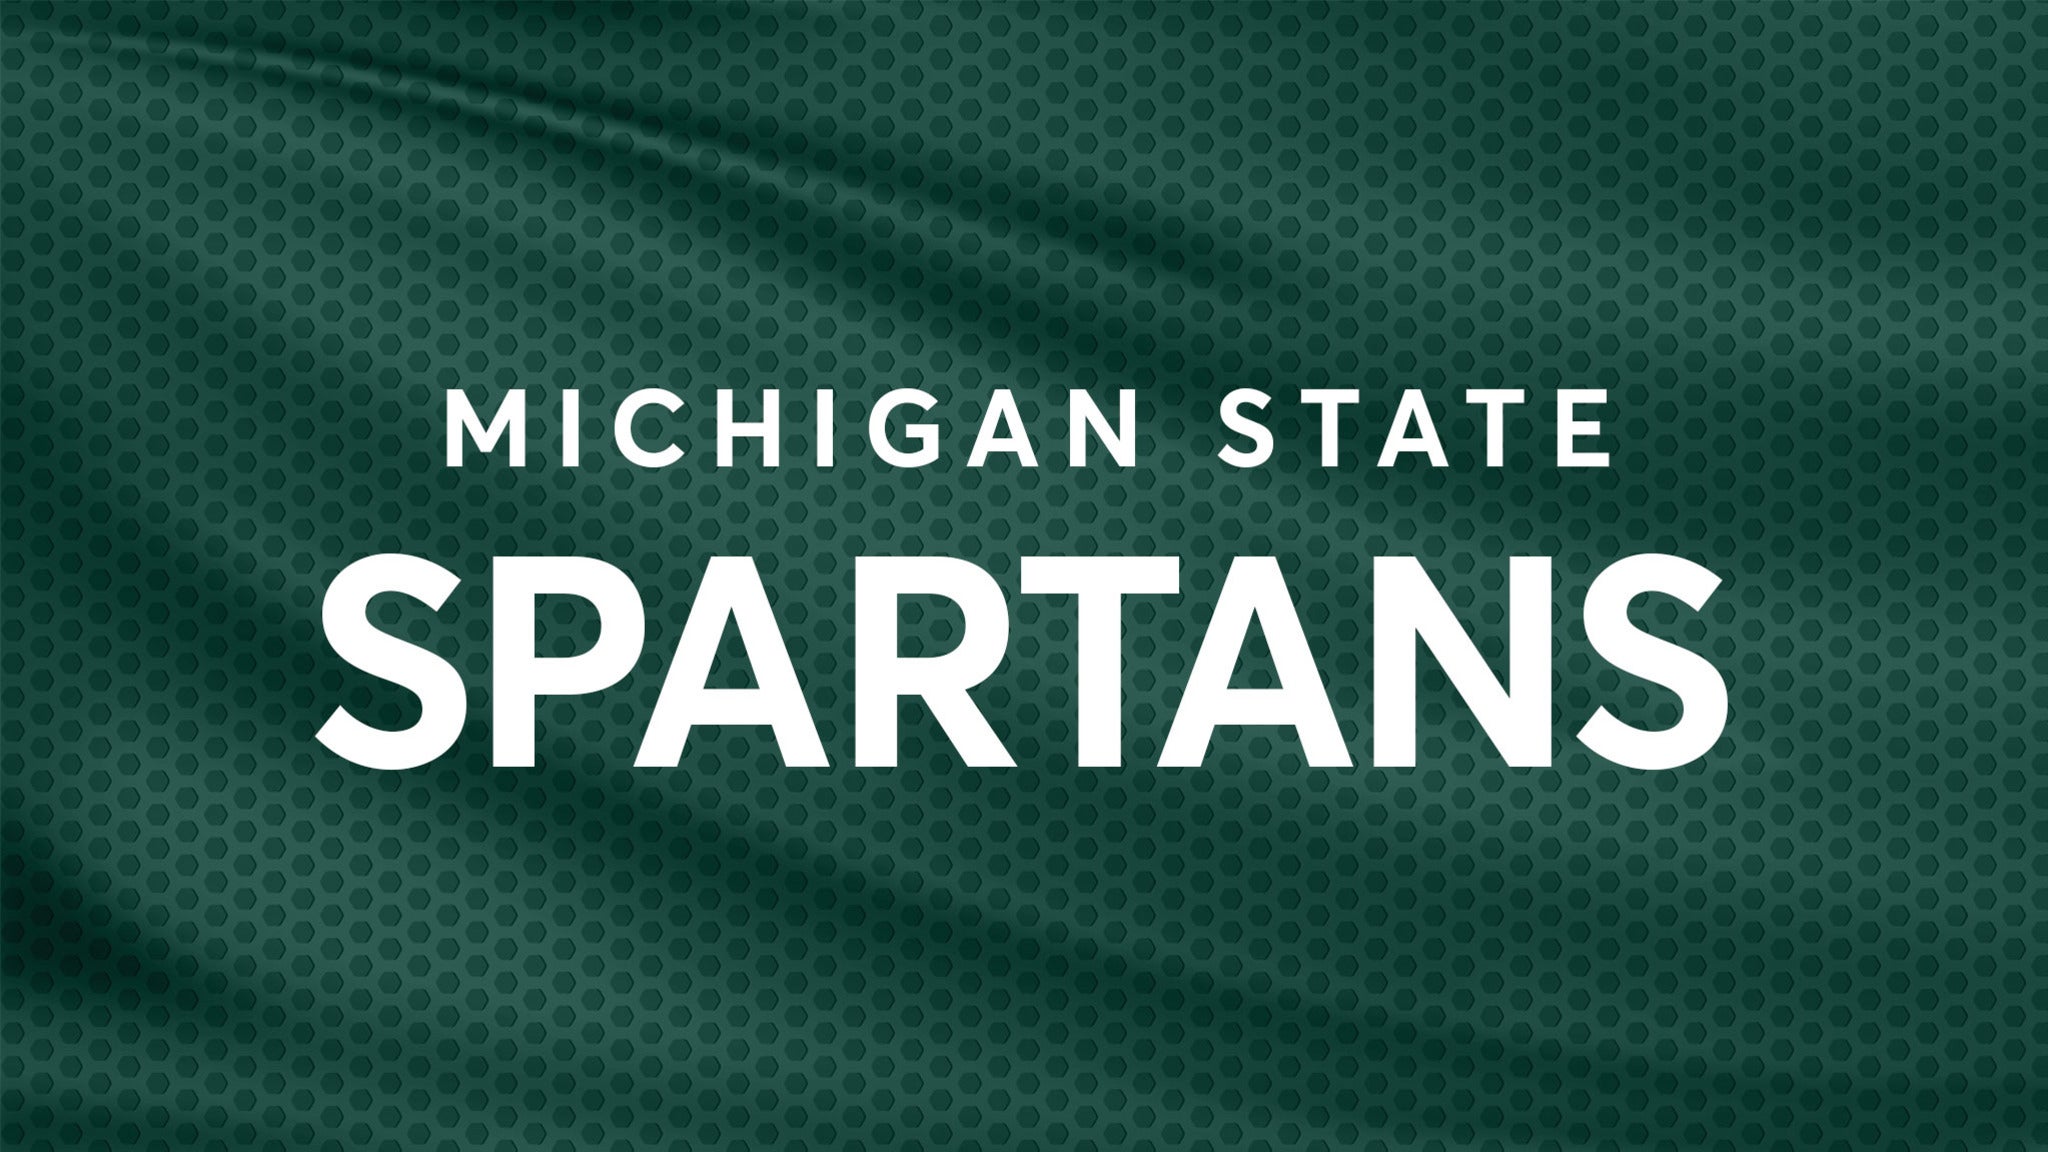 Michigan State Spartans Softball presale information on freepresalepasswords.com